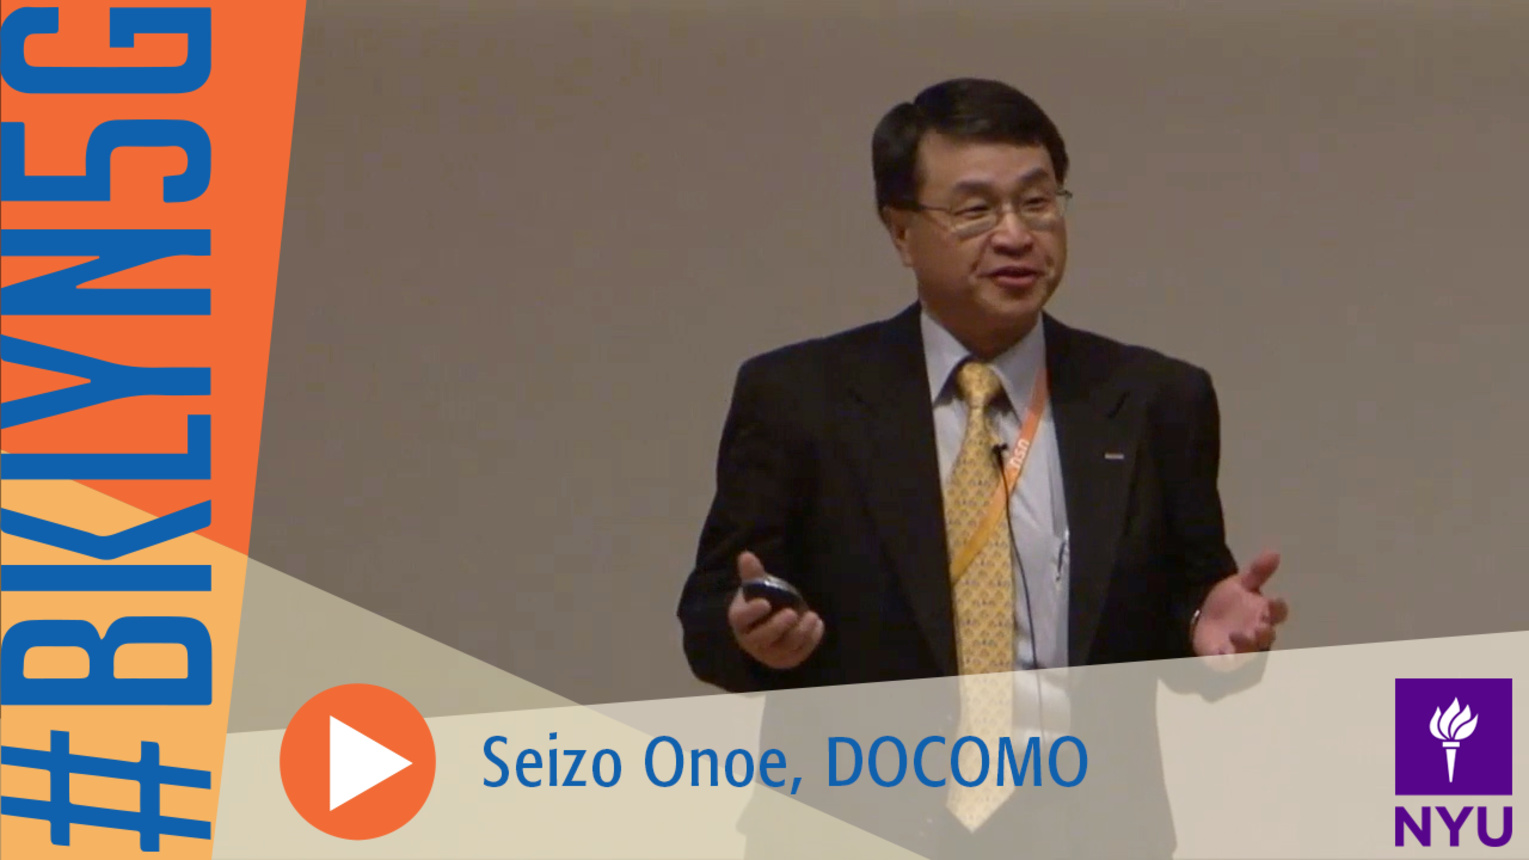 The Brooklyn 5G Summit: Dr. Seizo Onoe from DOCOMO